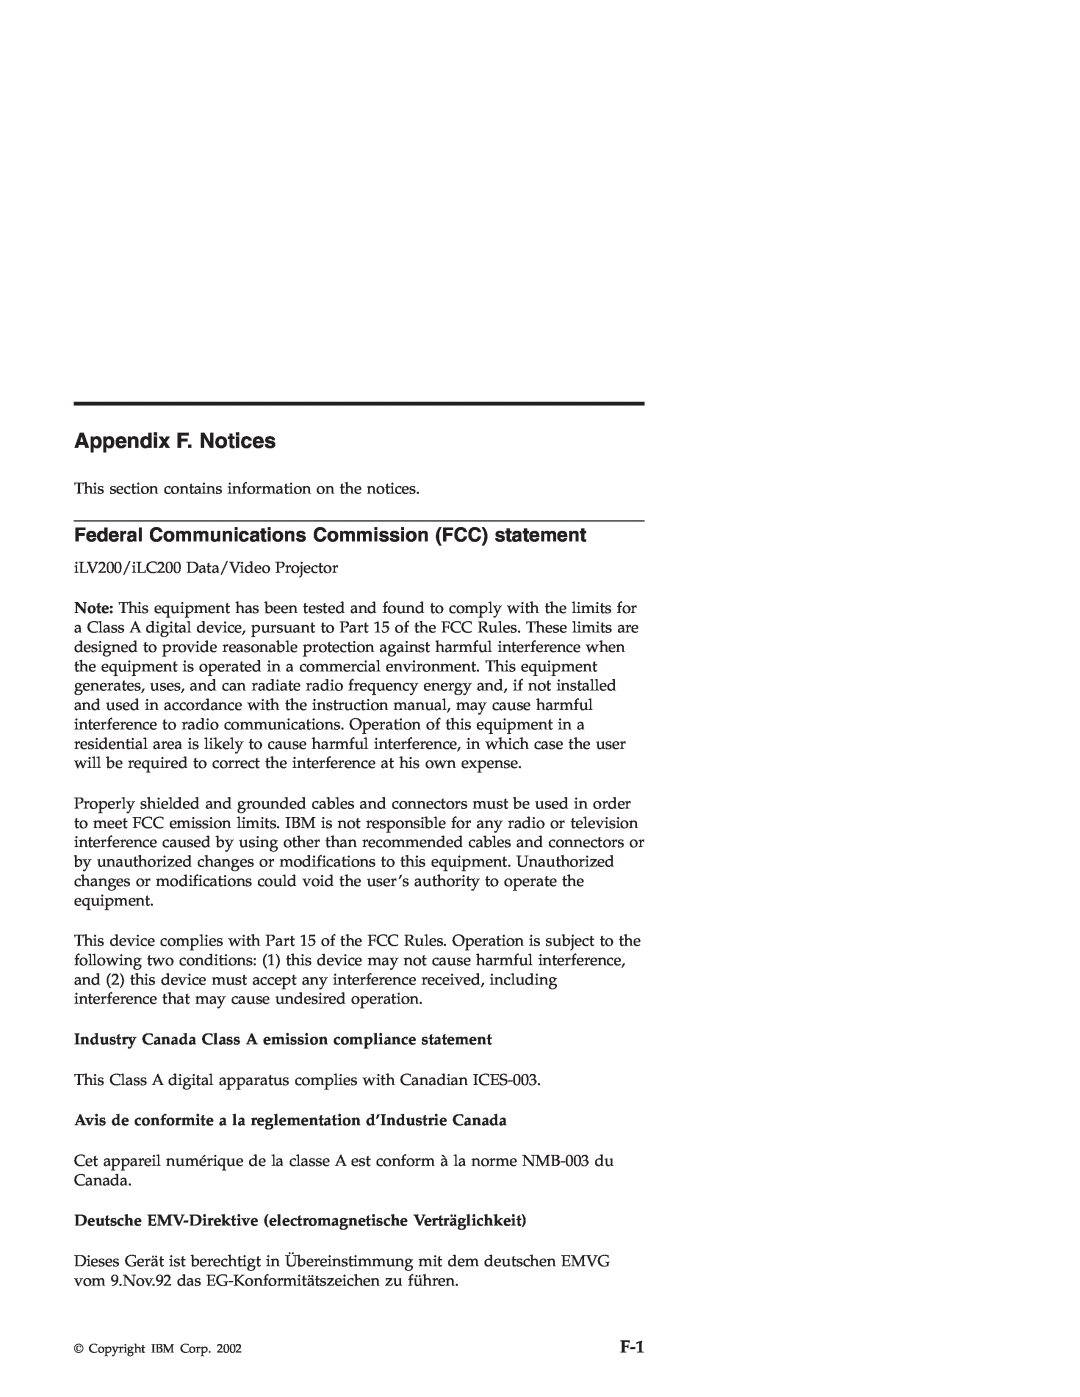 IBM ILC200, ILV200 manual Appendix F. Notices, Federal Communications Commission FCC statement 